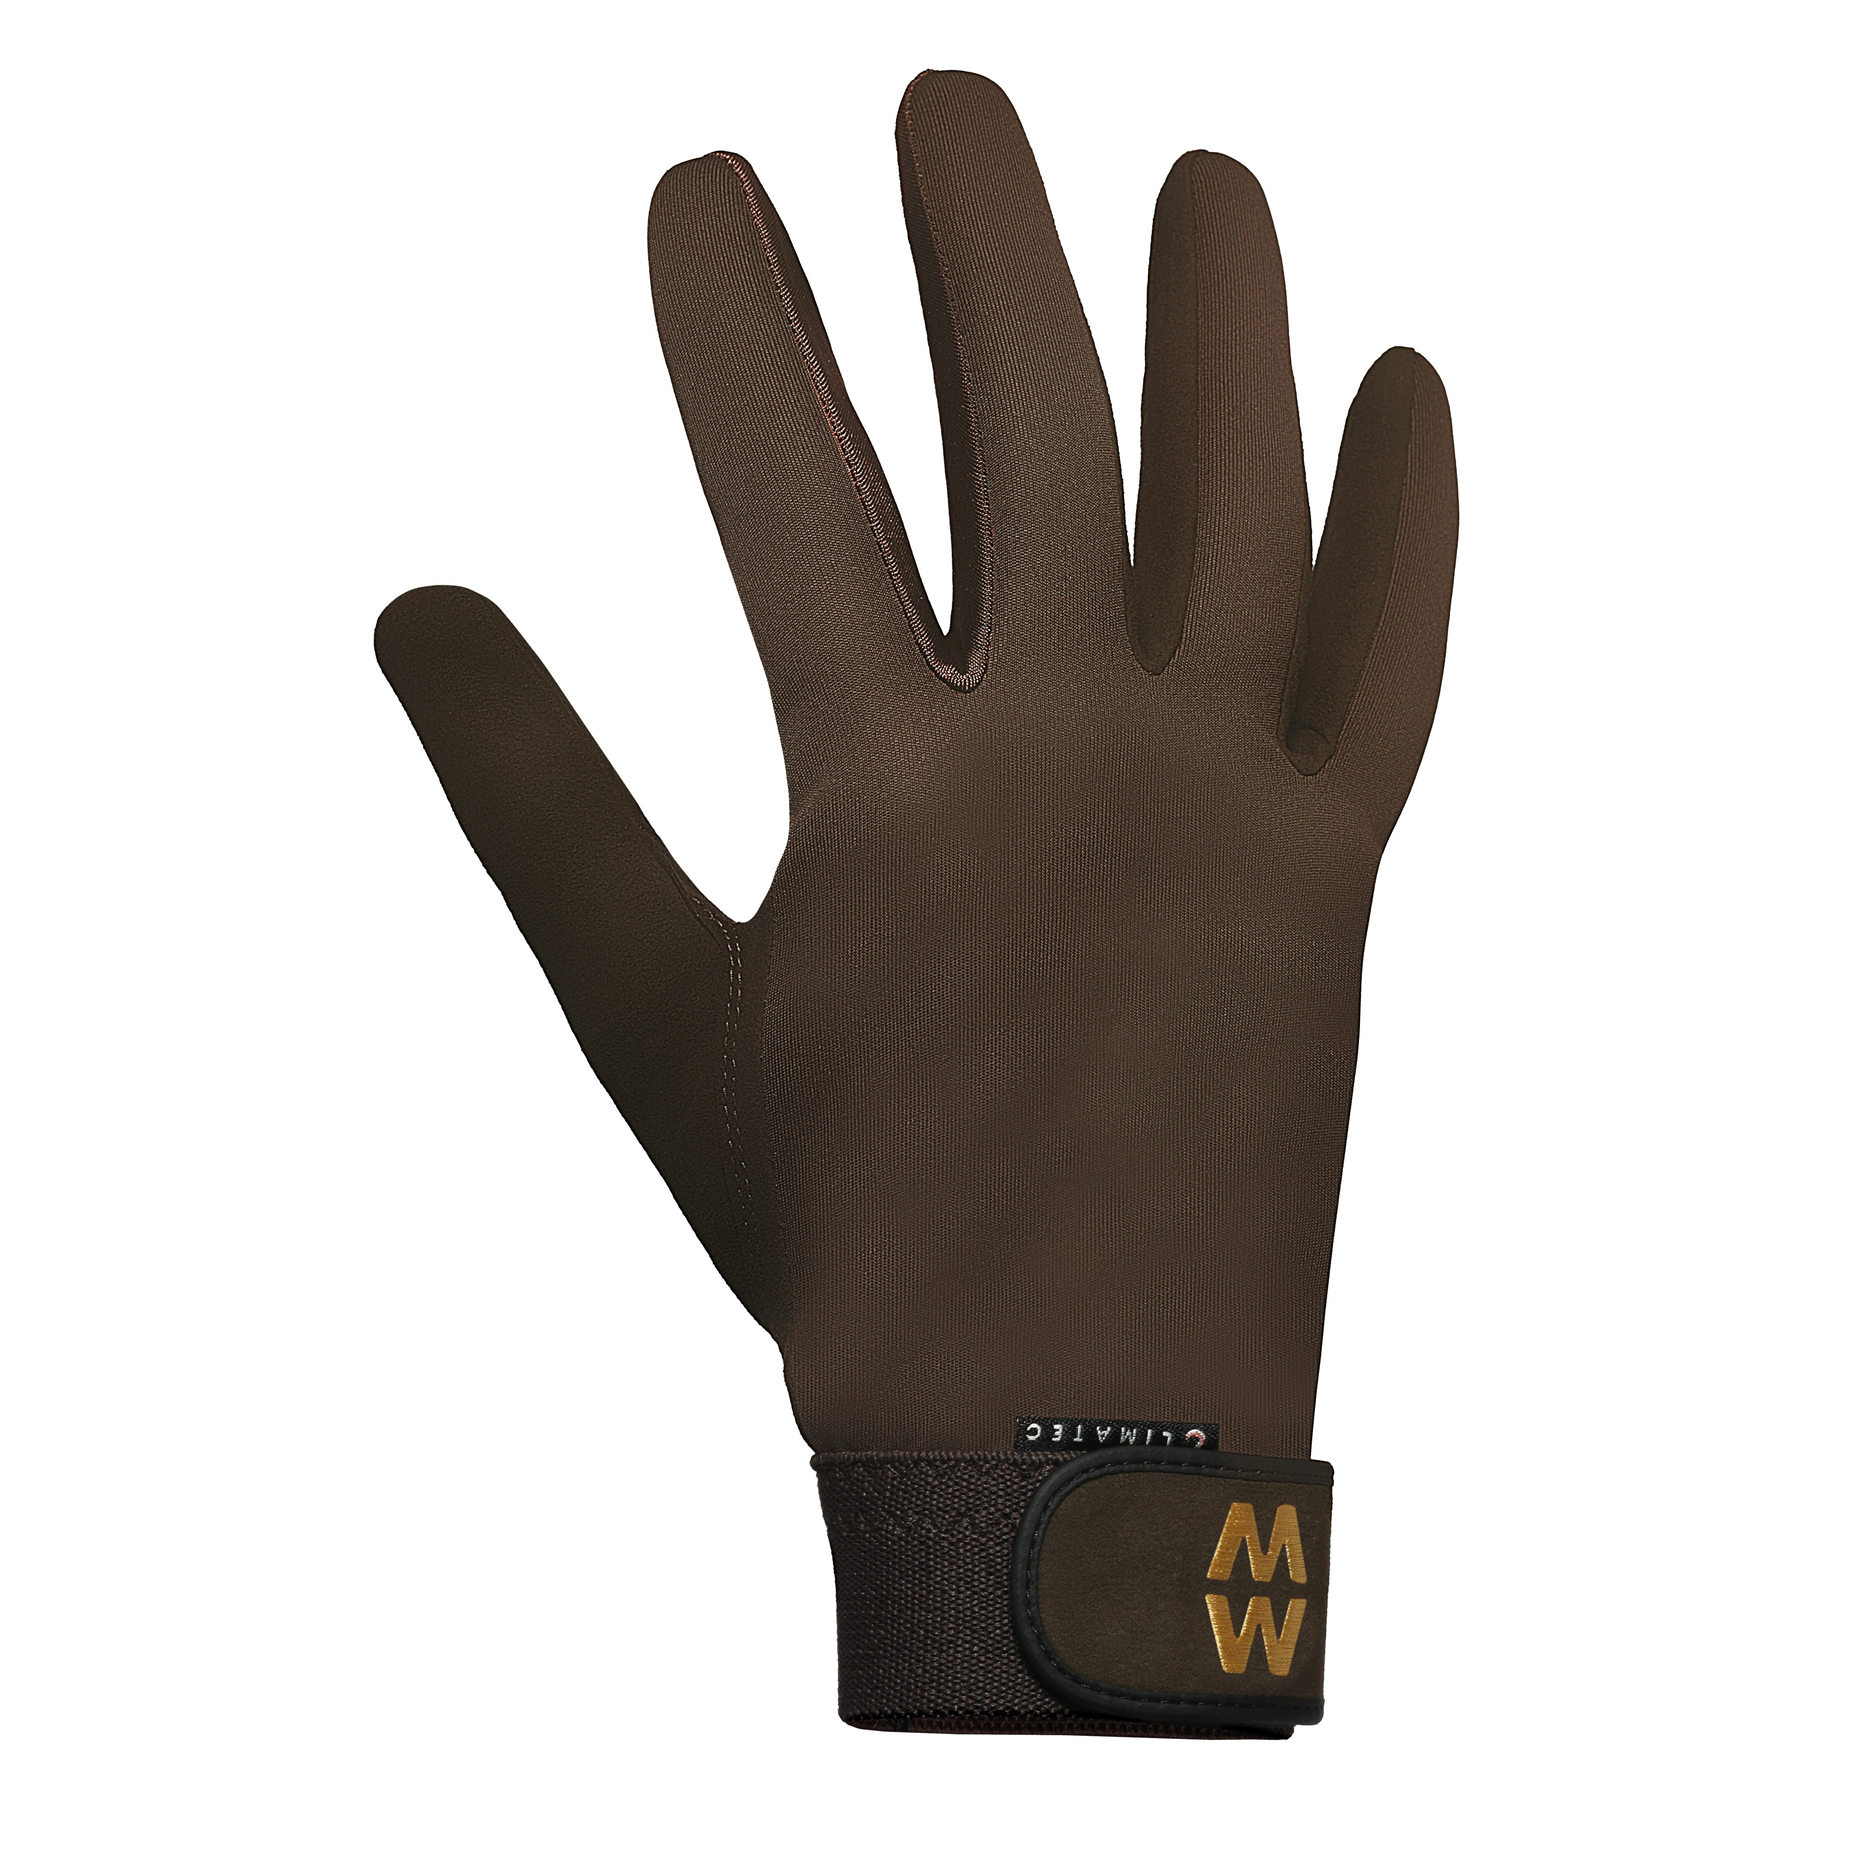 Macwet Climatec total grip Gloves - Long cuff - Brown Size 10 - official Macwet stockist